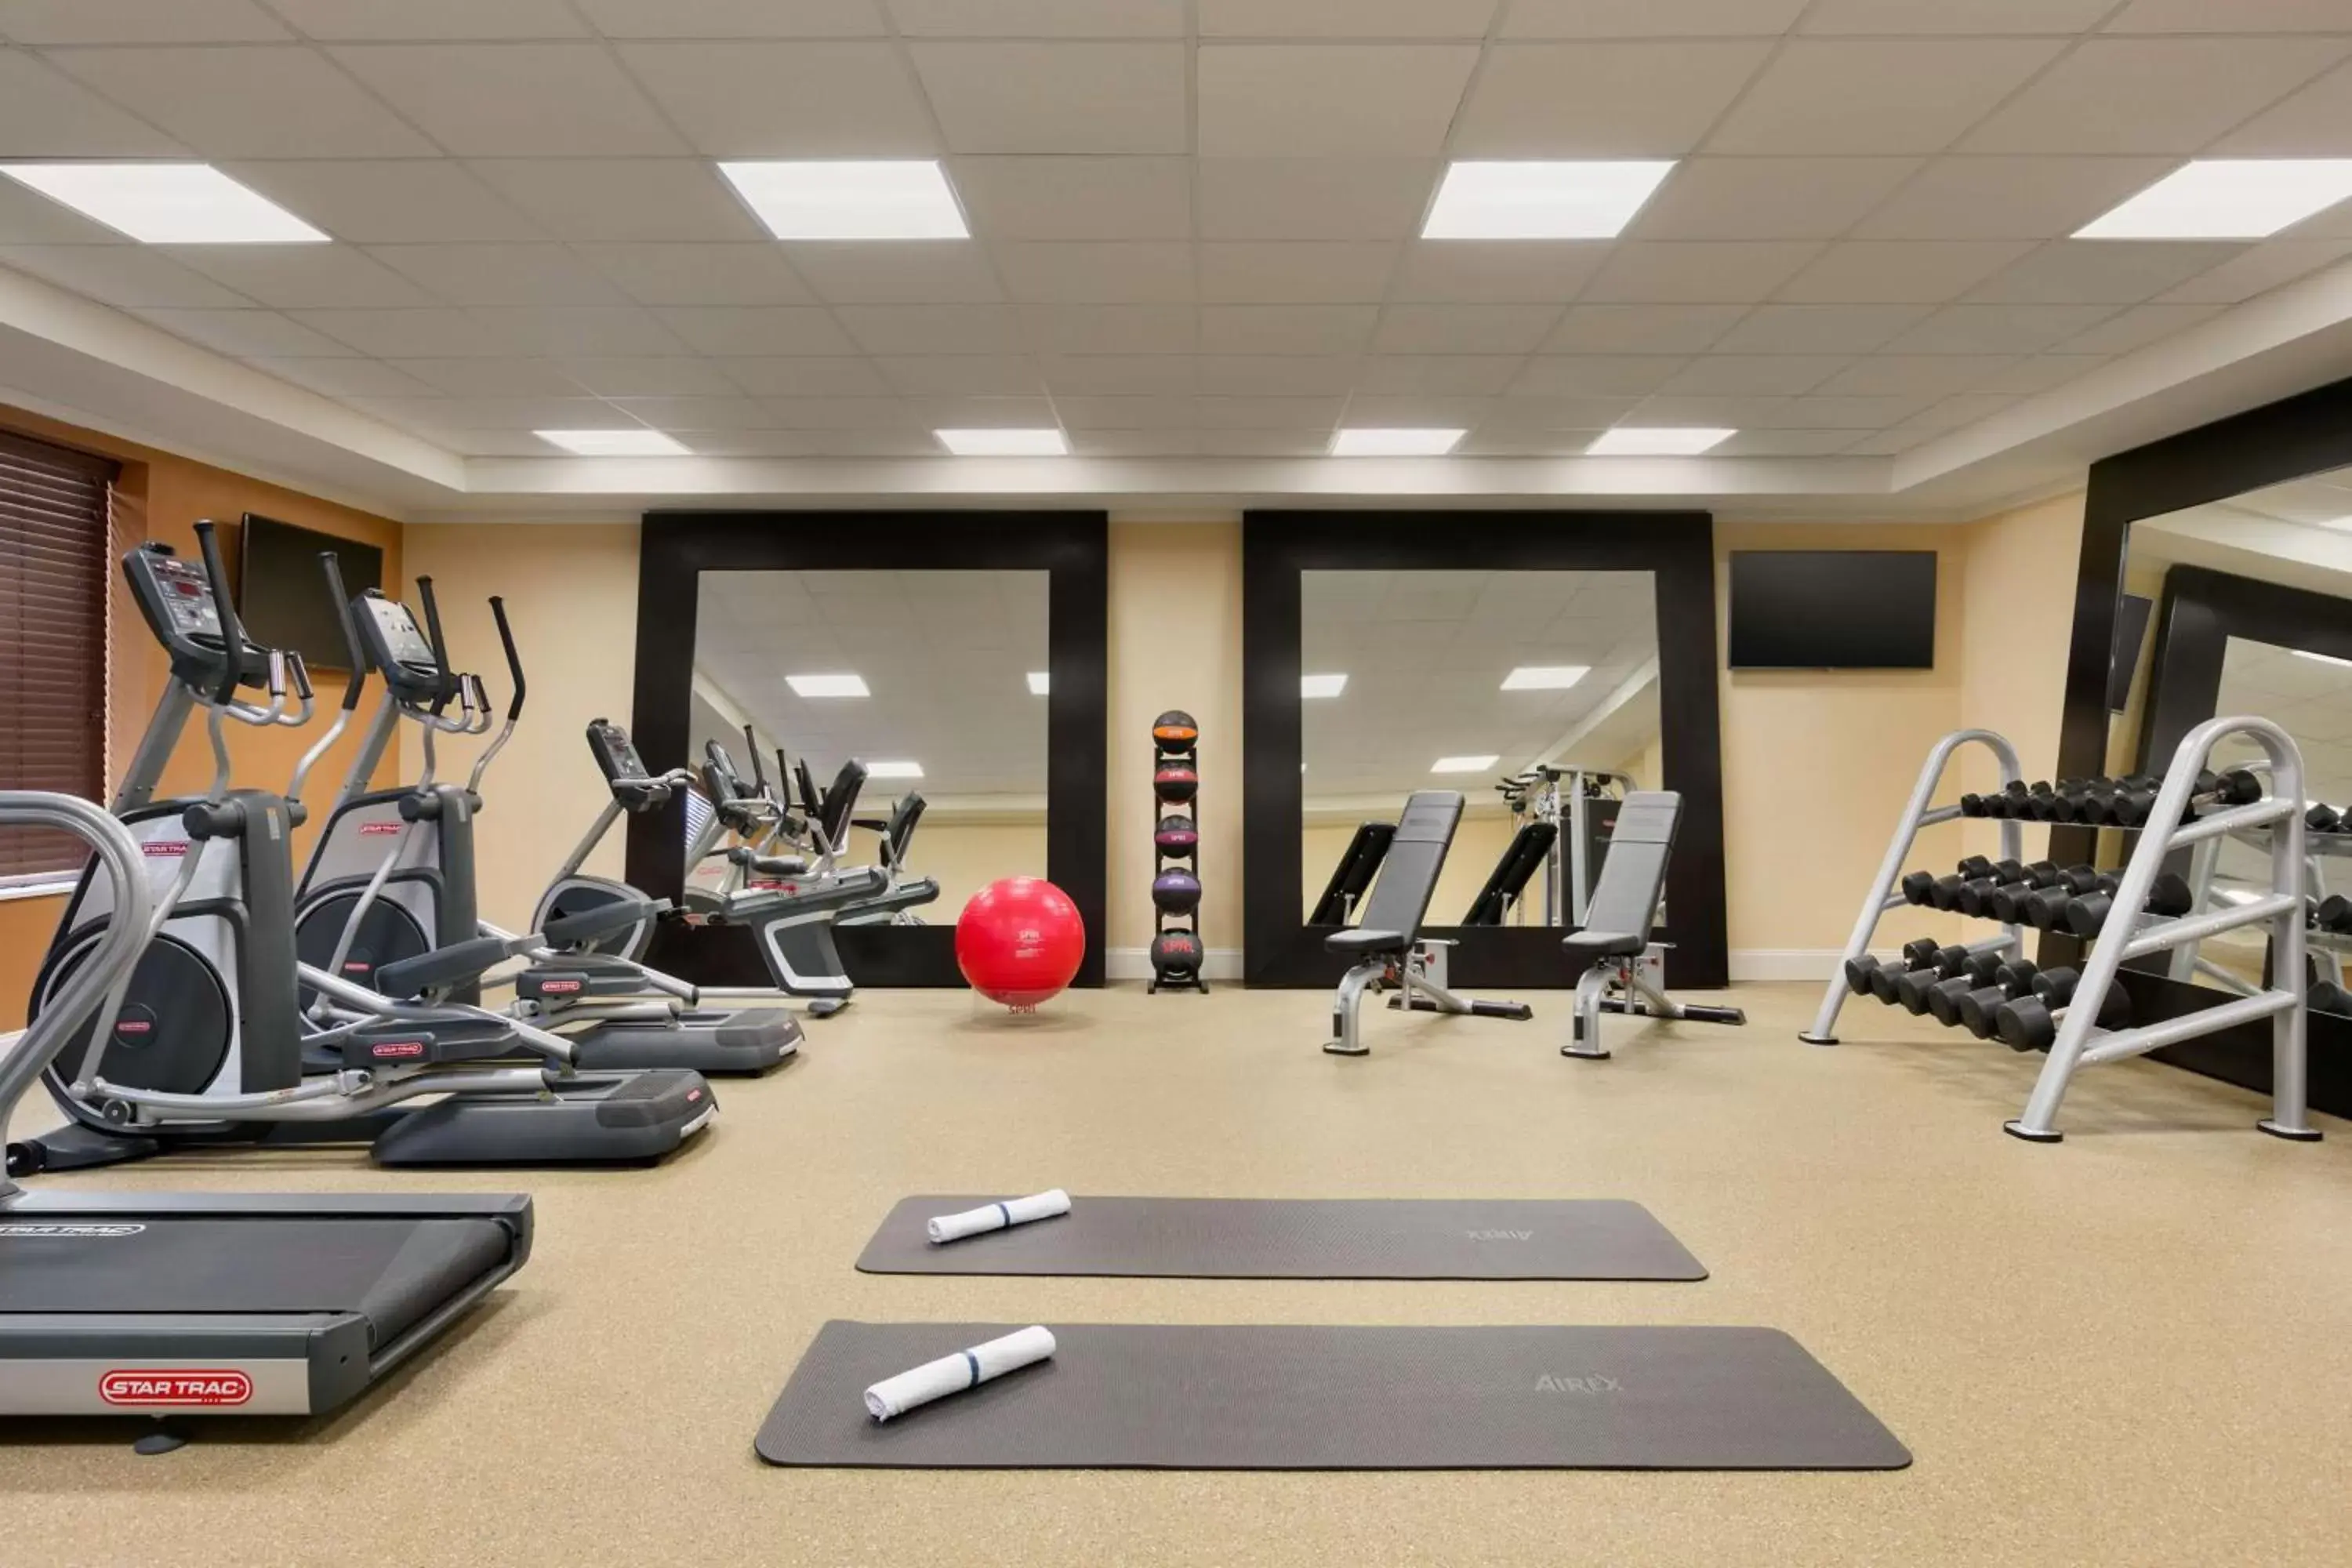 Fitness centre/facilities, Fitness Center/Facilities in Hilton Garden Inn Statesville